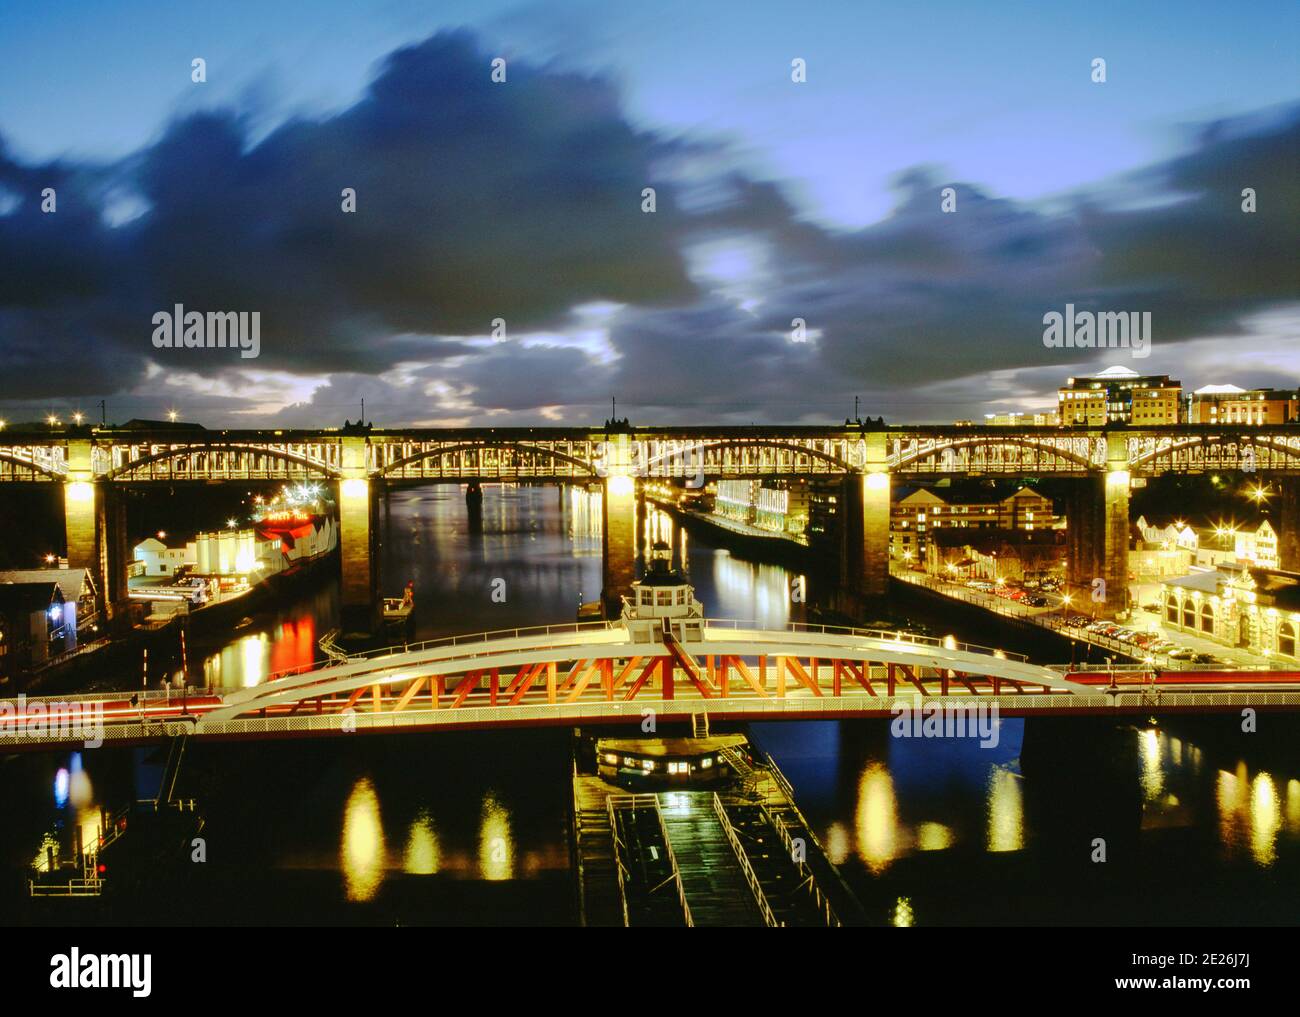 Swing Bridge and High Level Bridge at Night, Newcastle upon Tyne, England Stock Photo